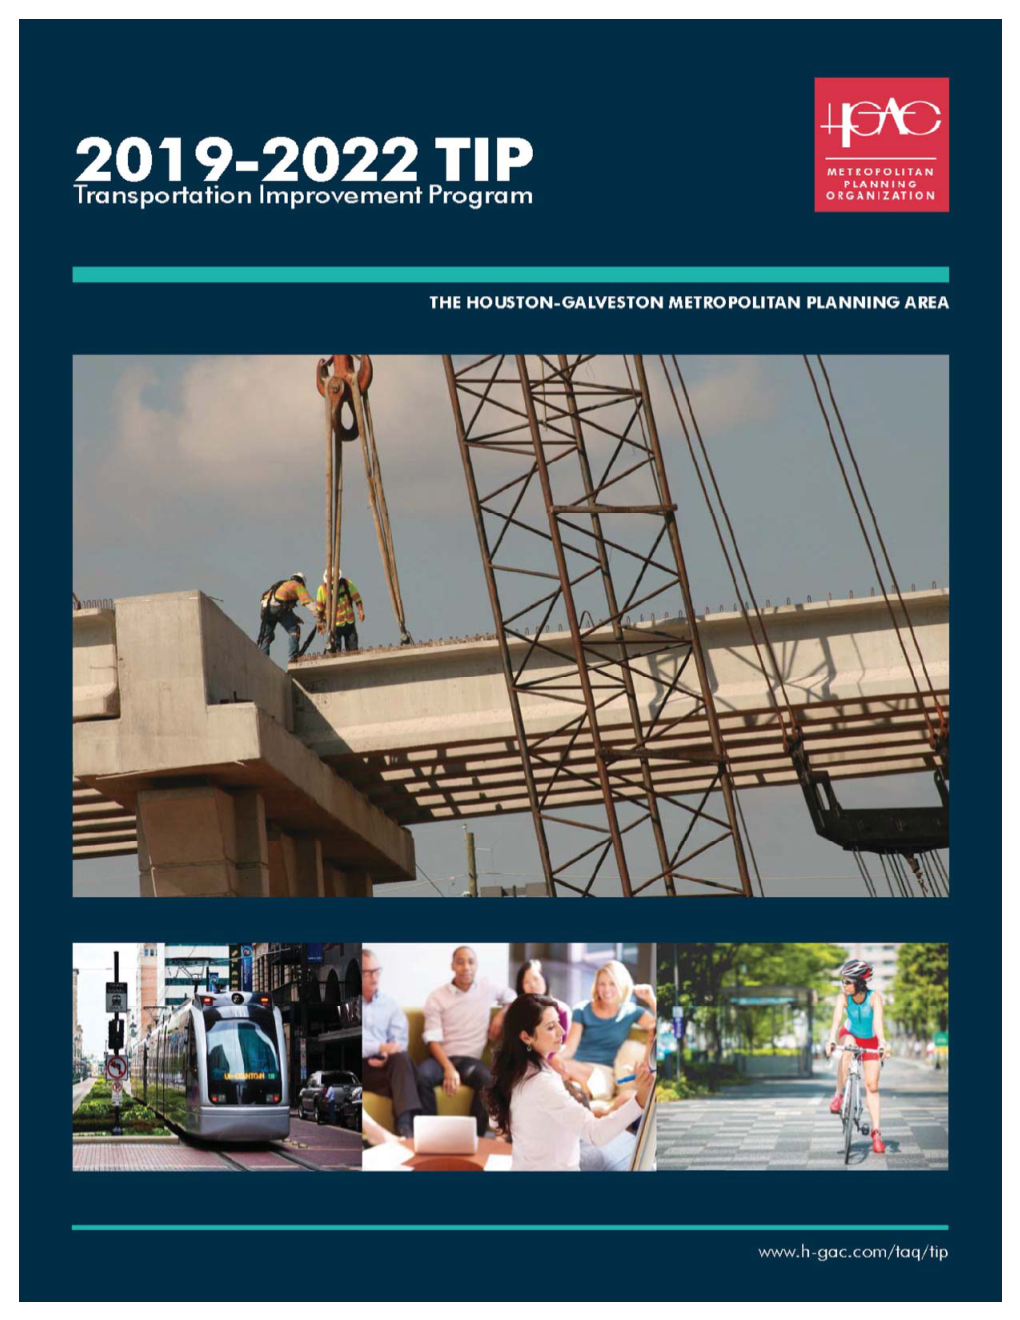 2019-2022 Transportation Improvement Program (TIP) for the Houston-Galveston Metropolitan Planning Area